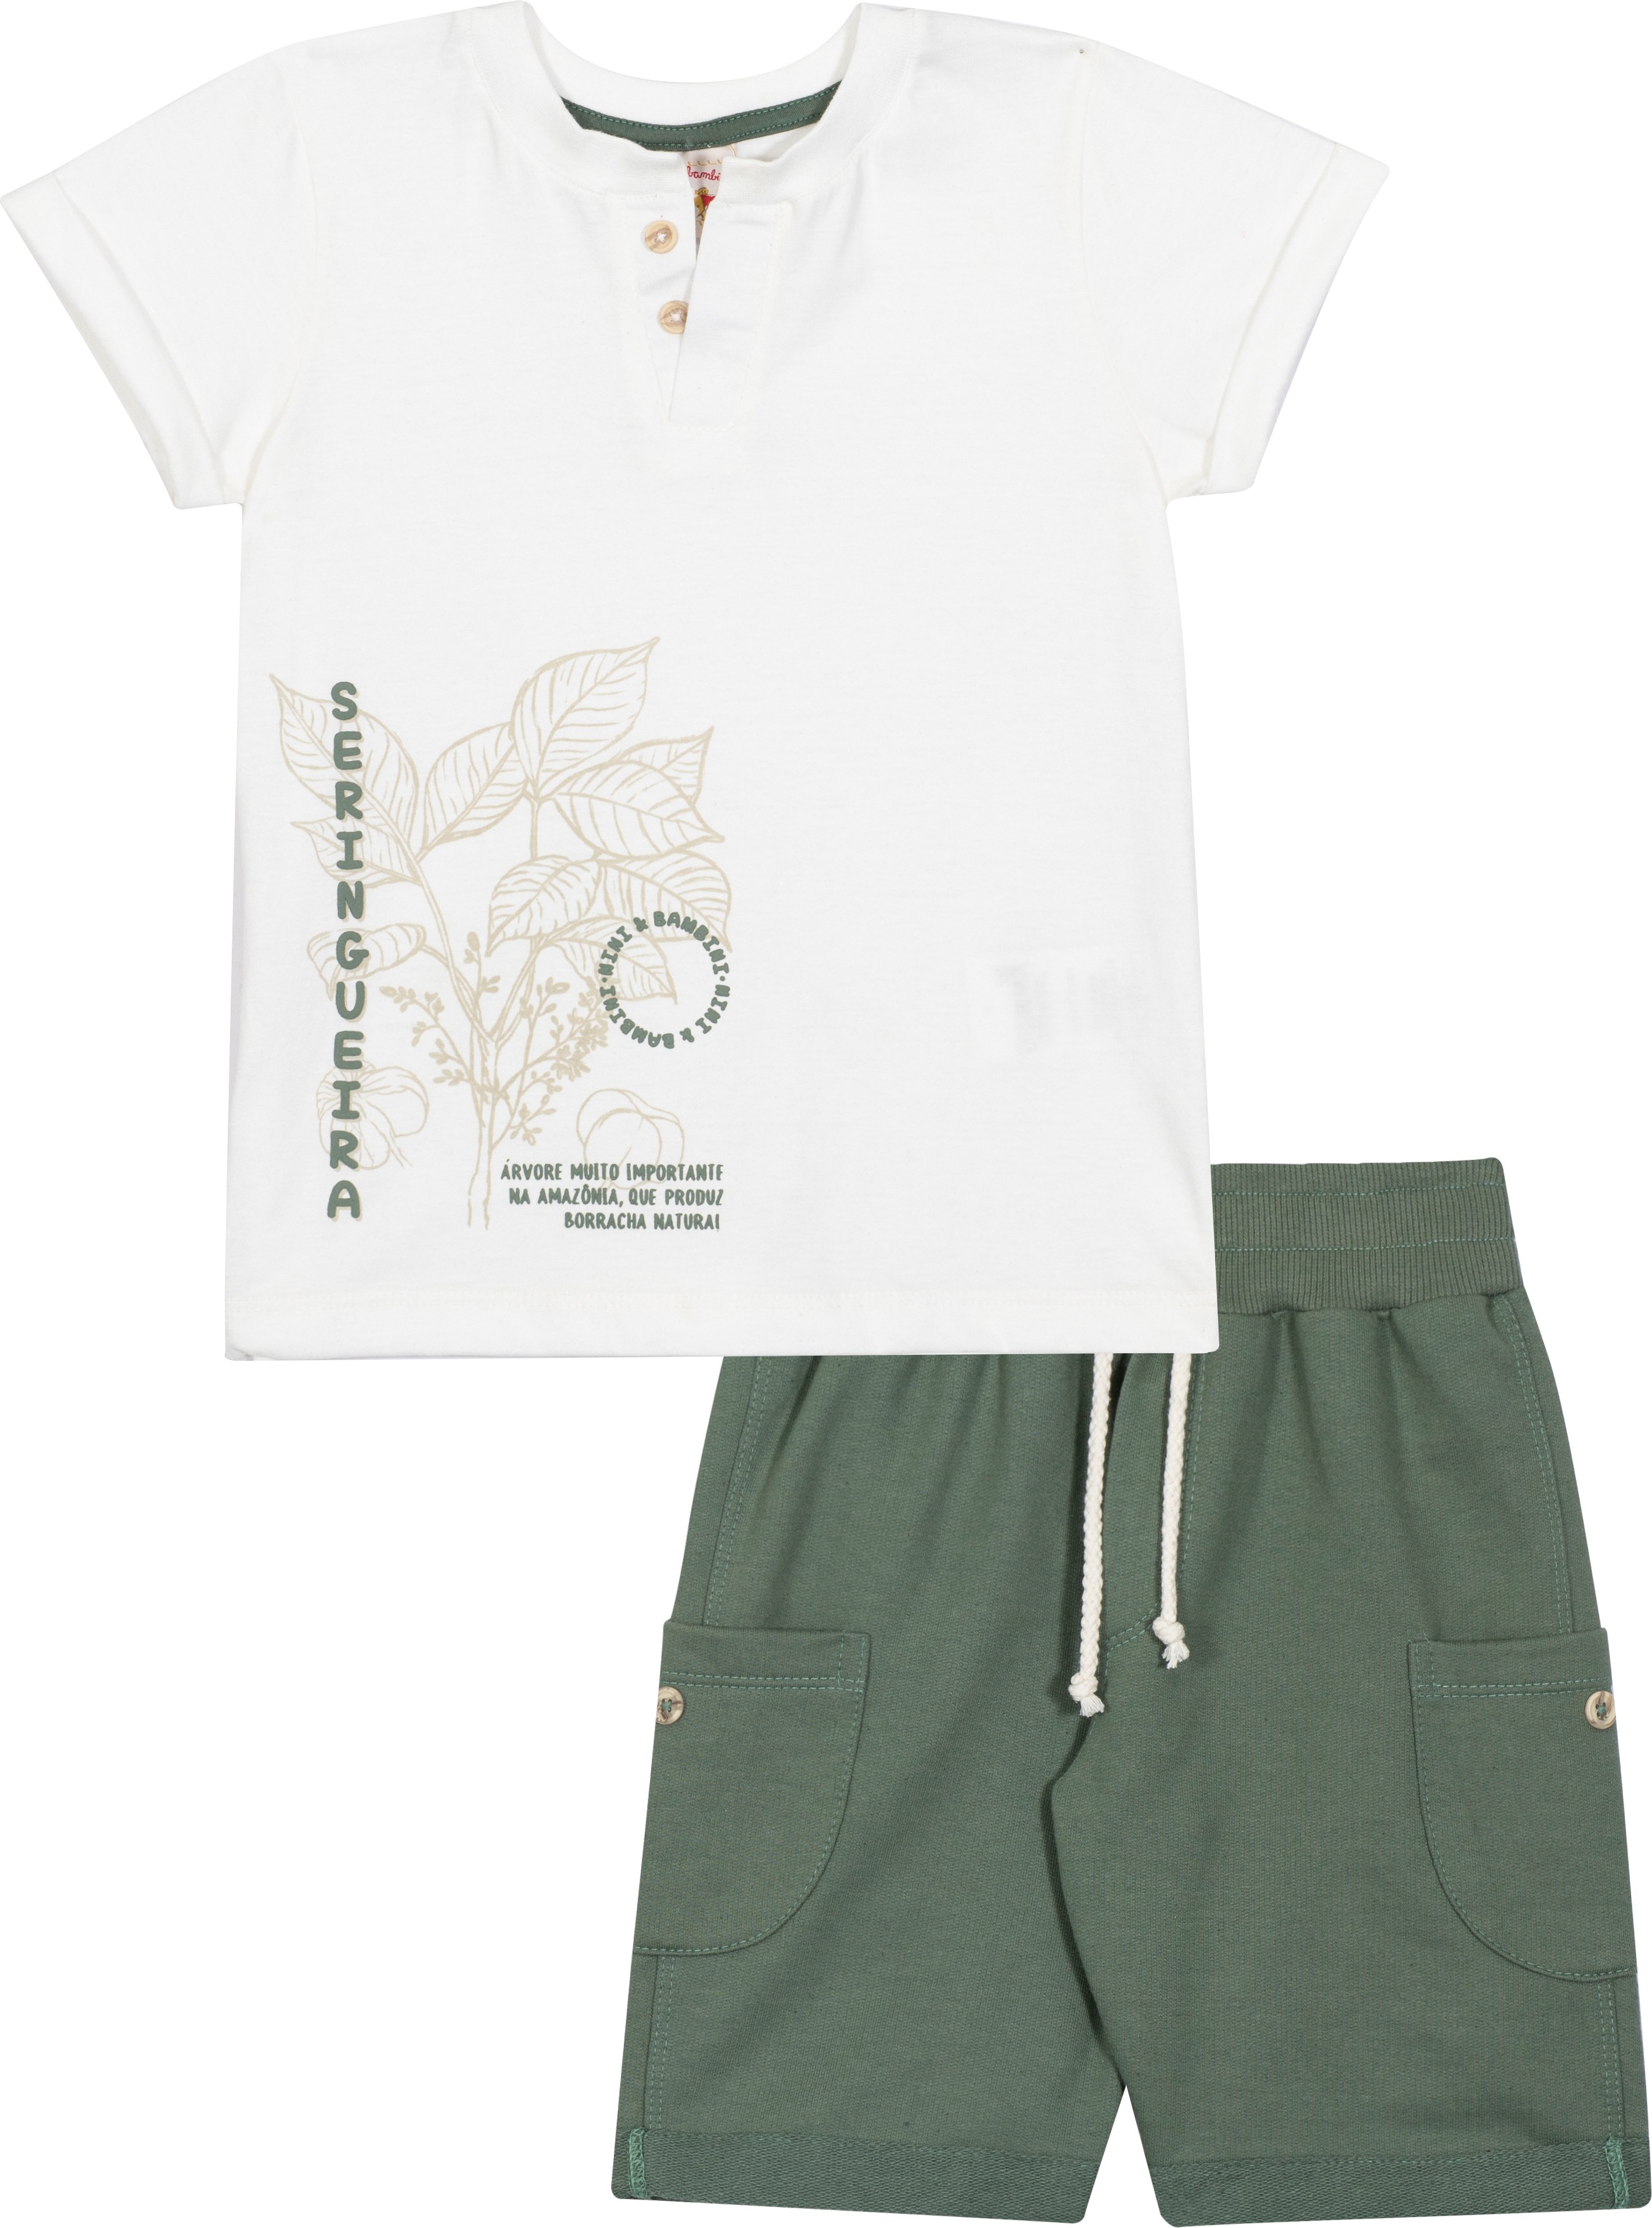 Conjunto Camiseta e Bermuda Amazônia - Nini Bambini